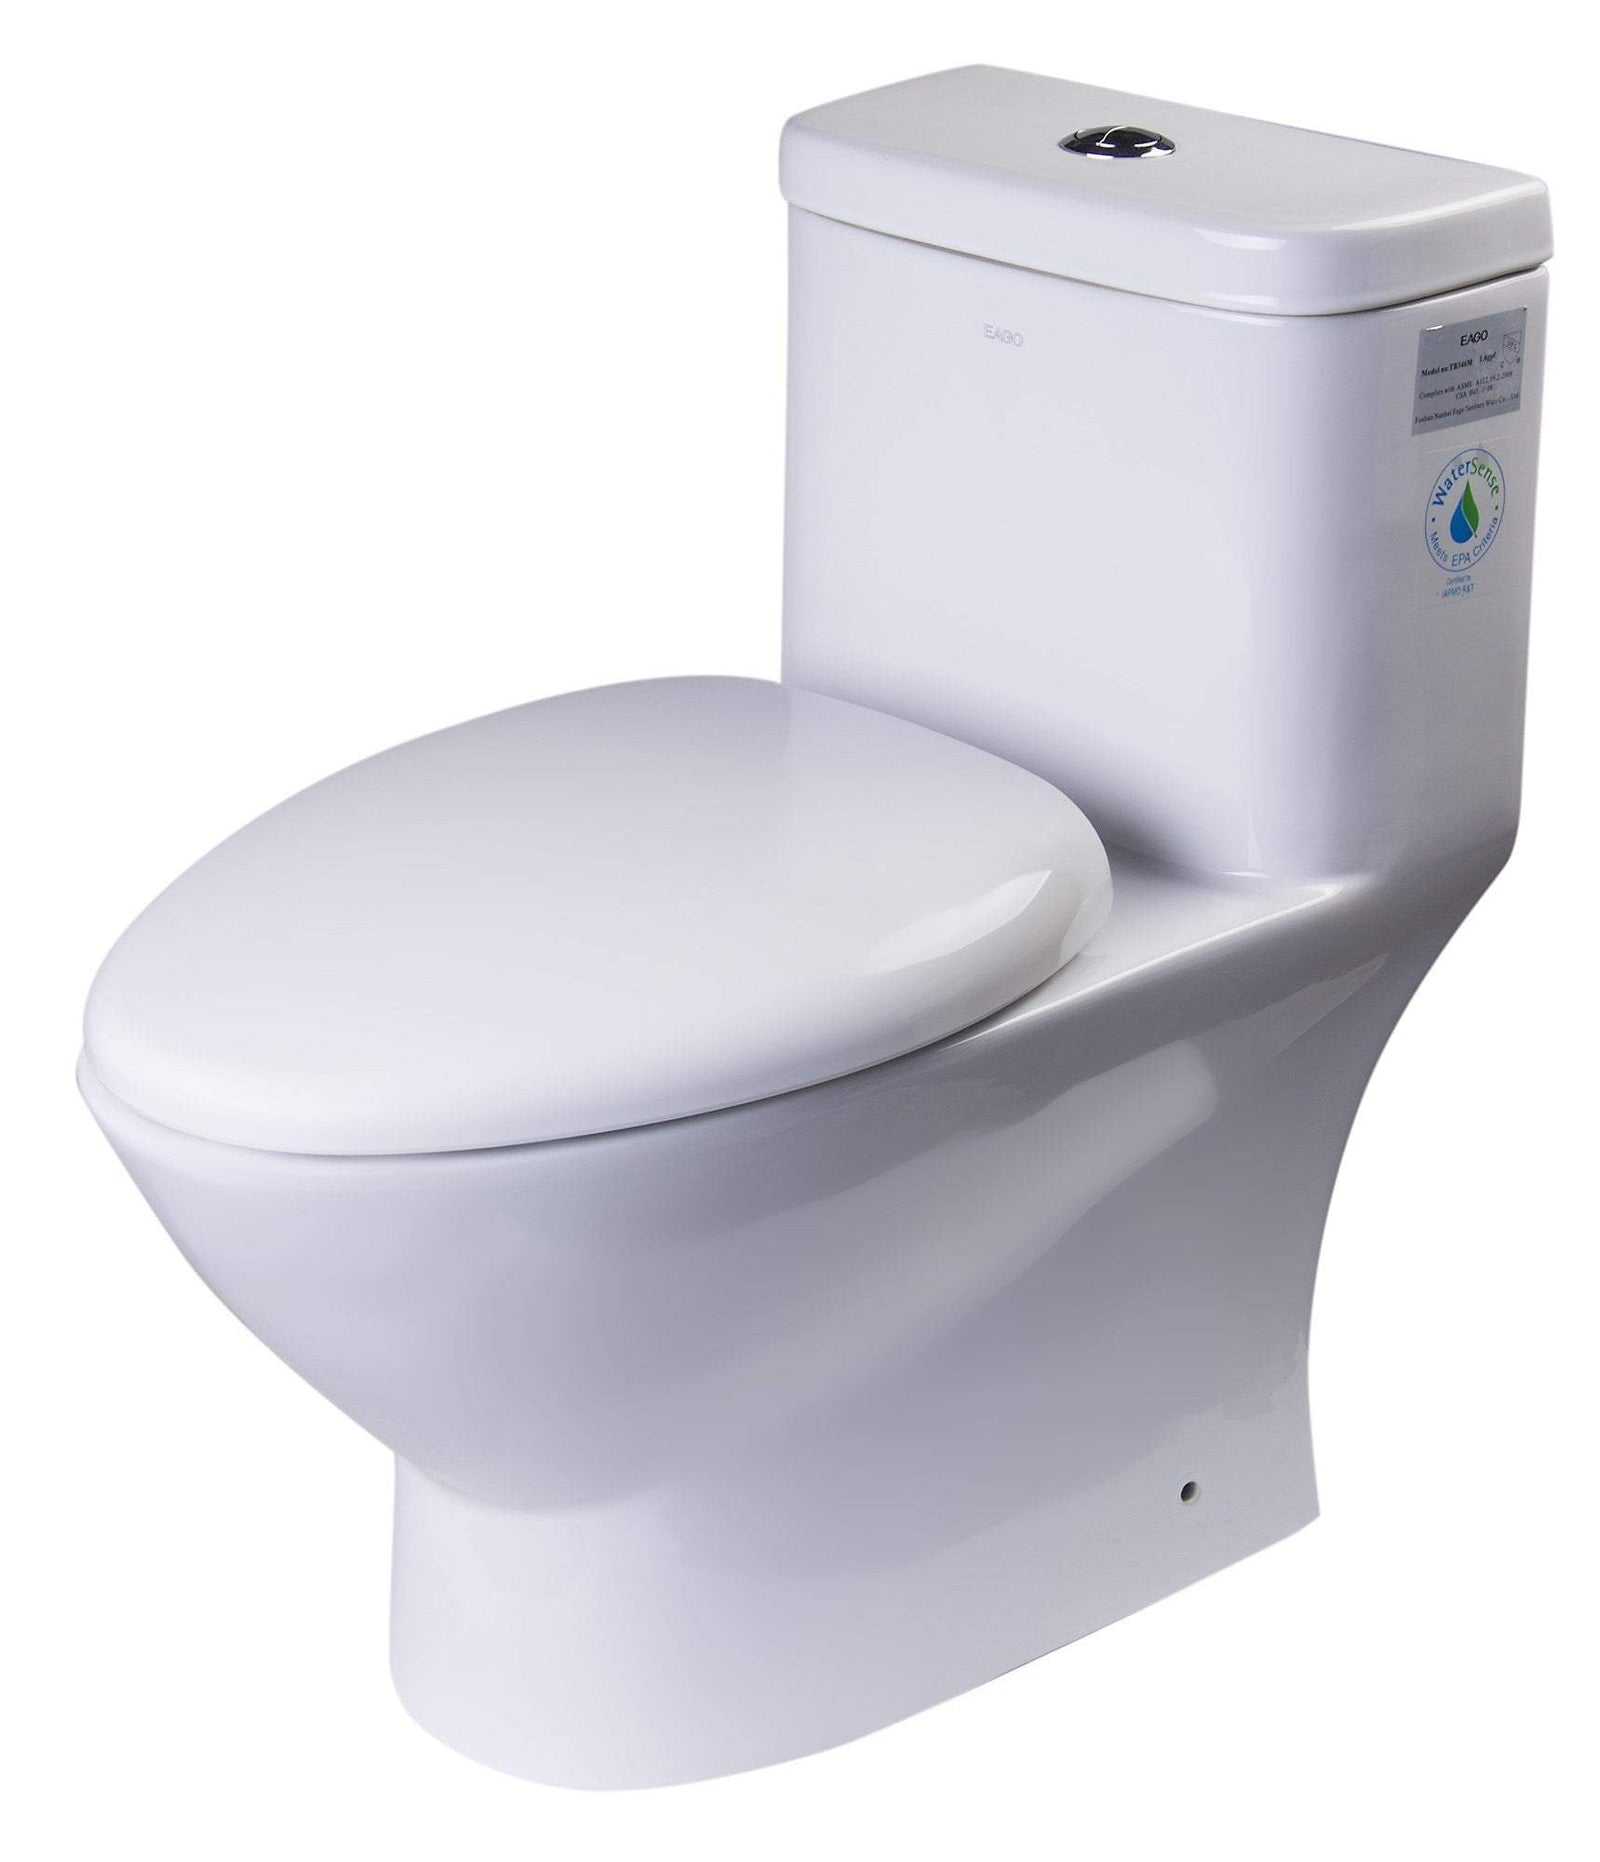 https://cdn.shopify.com/s/files/1/0627/3513/products/alfi-toilets-modern-dual-flush-one-piece-eco-friendly-high-efficiency-low-flush-ceramic-toilet-1860214292511_1600x.jpg?v=1562953480